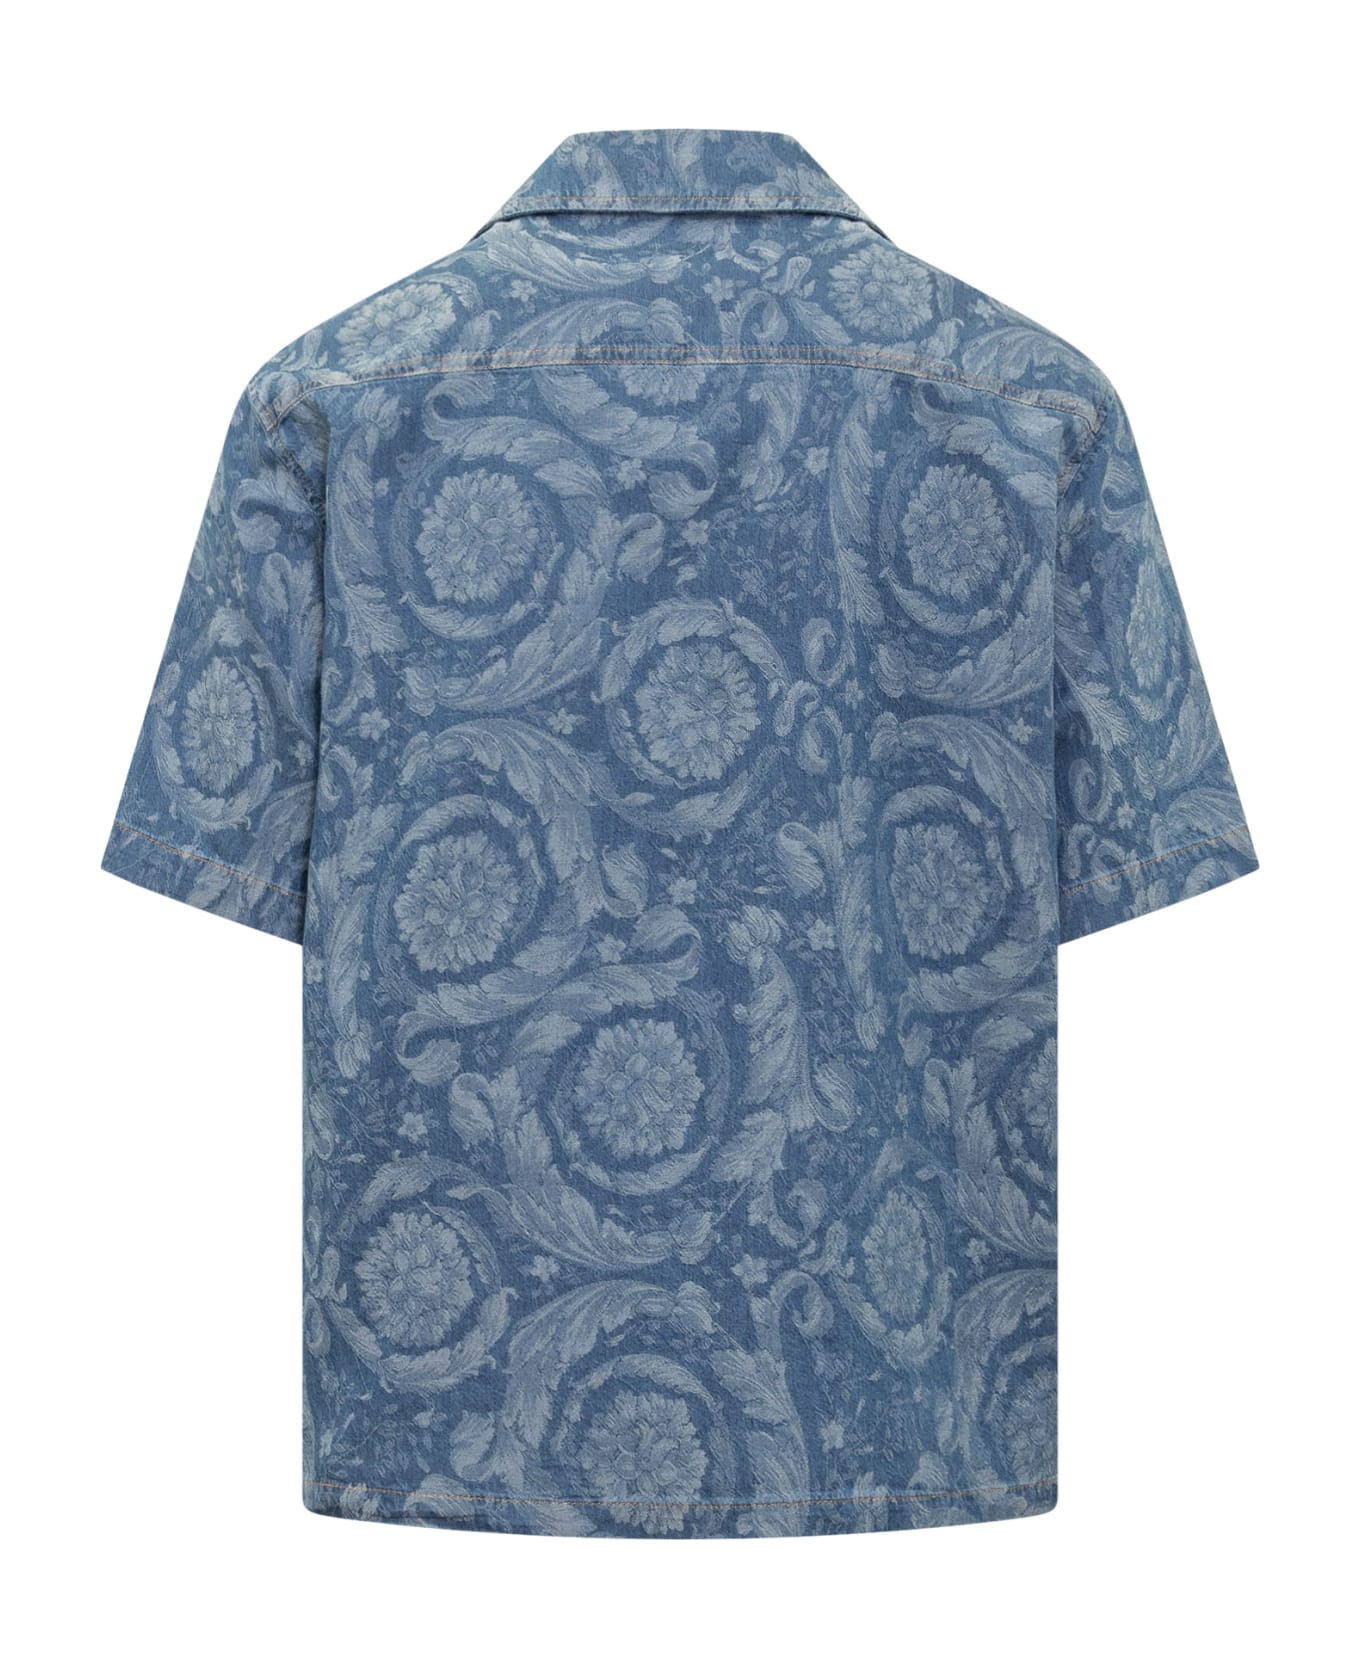 Versace Floral Print Cotton Shirt - Denim シャツ